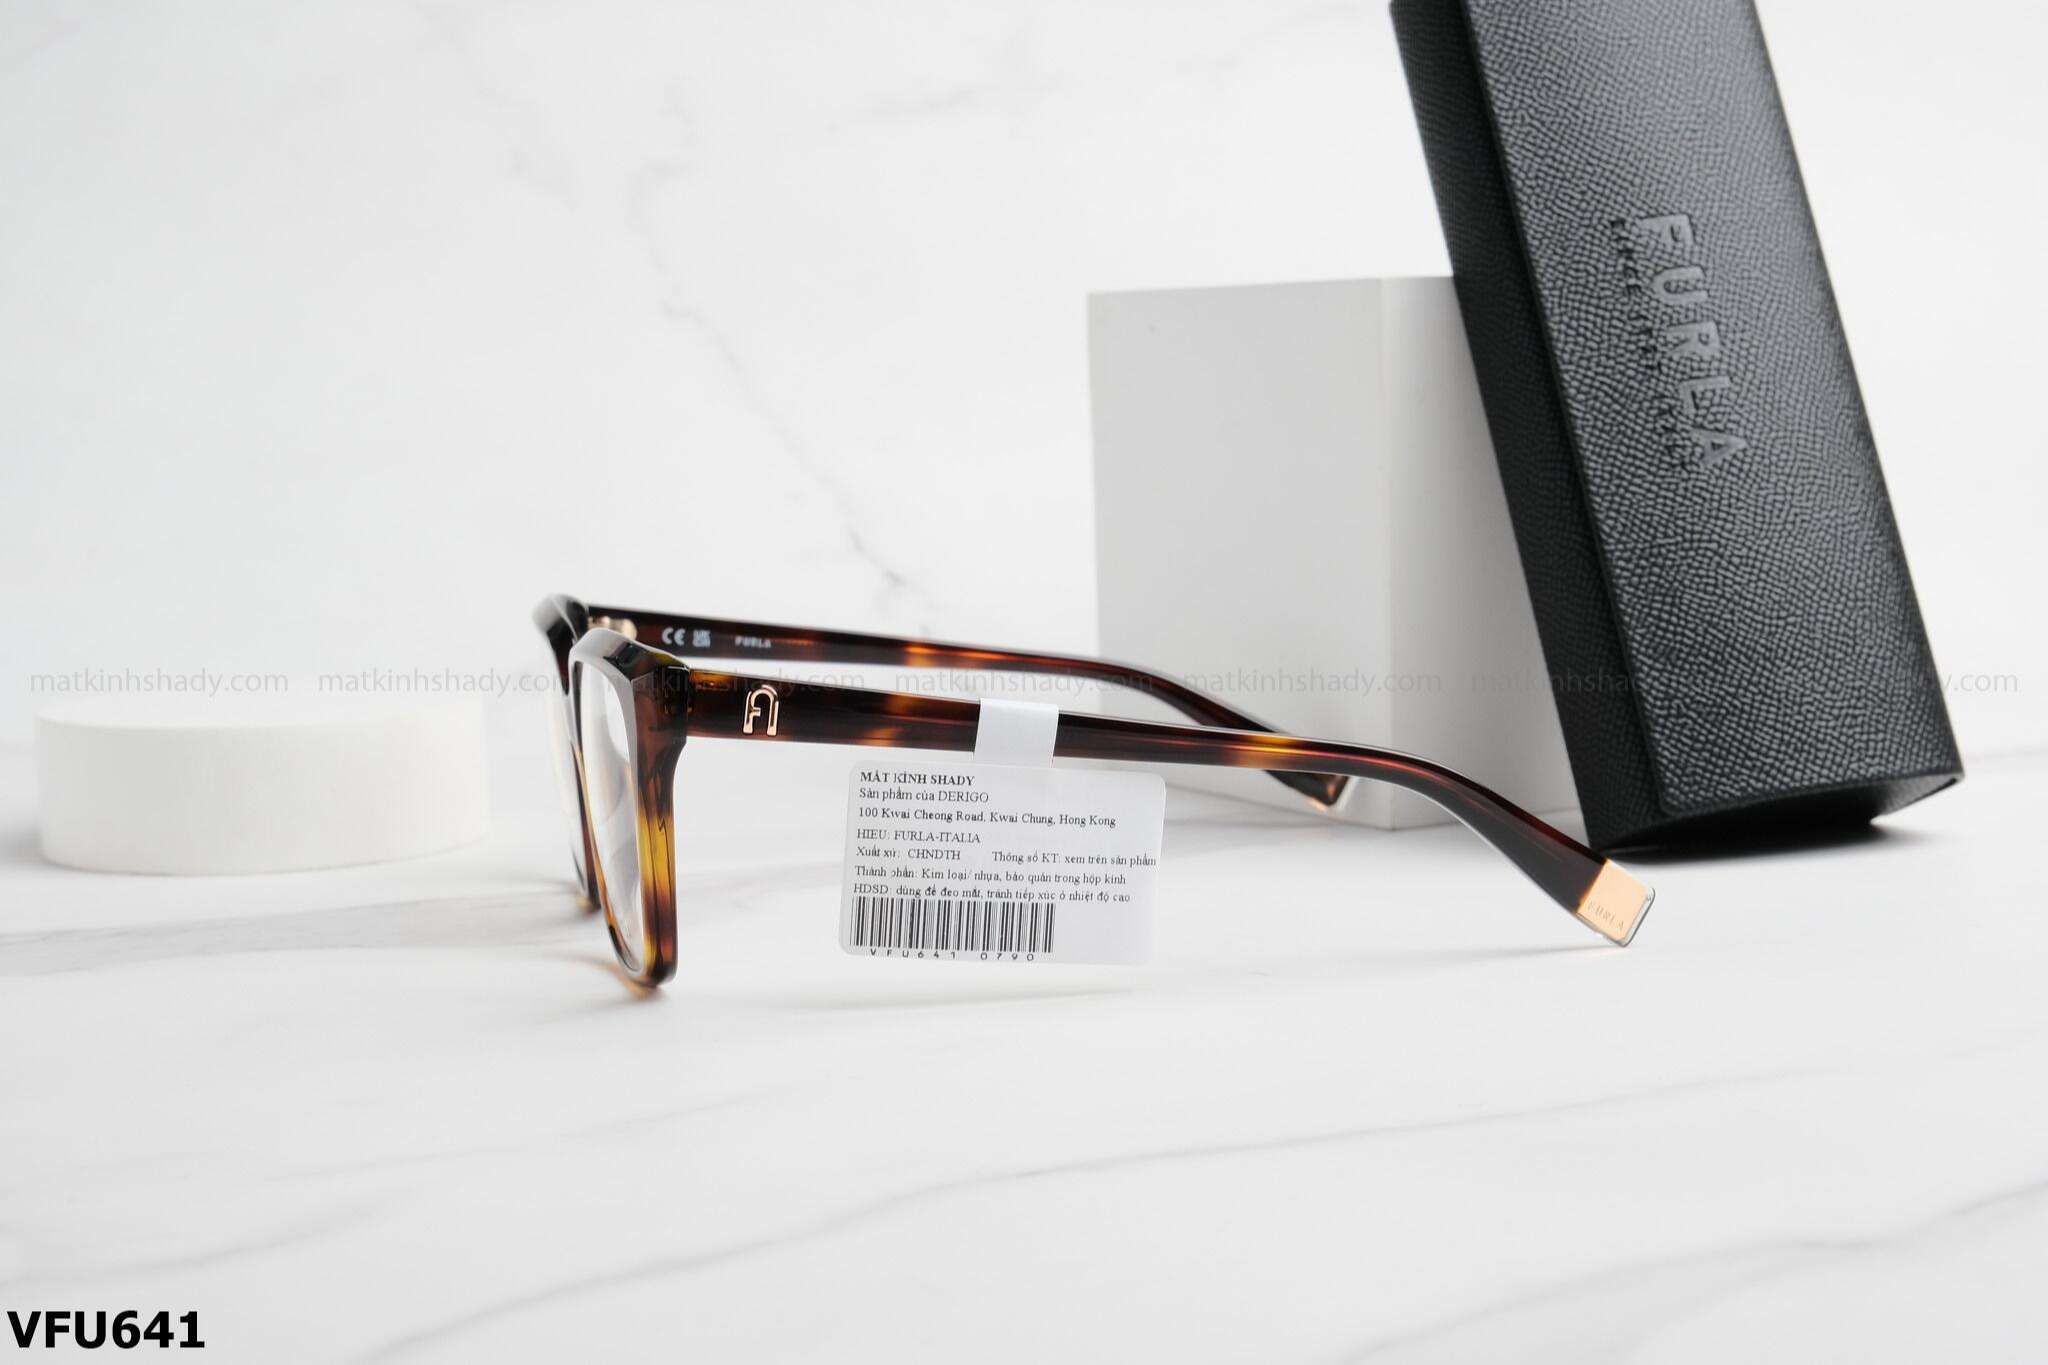  Furla Eyewear - Glasses - VFU641 